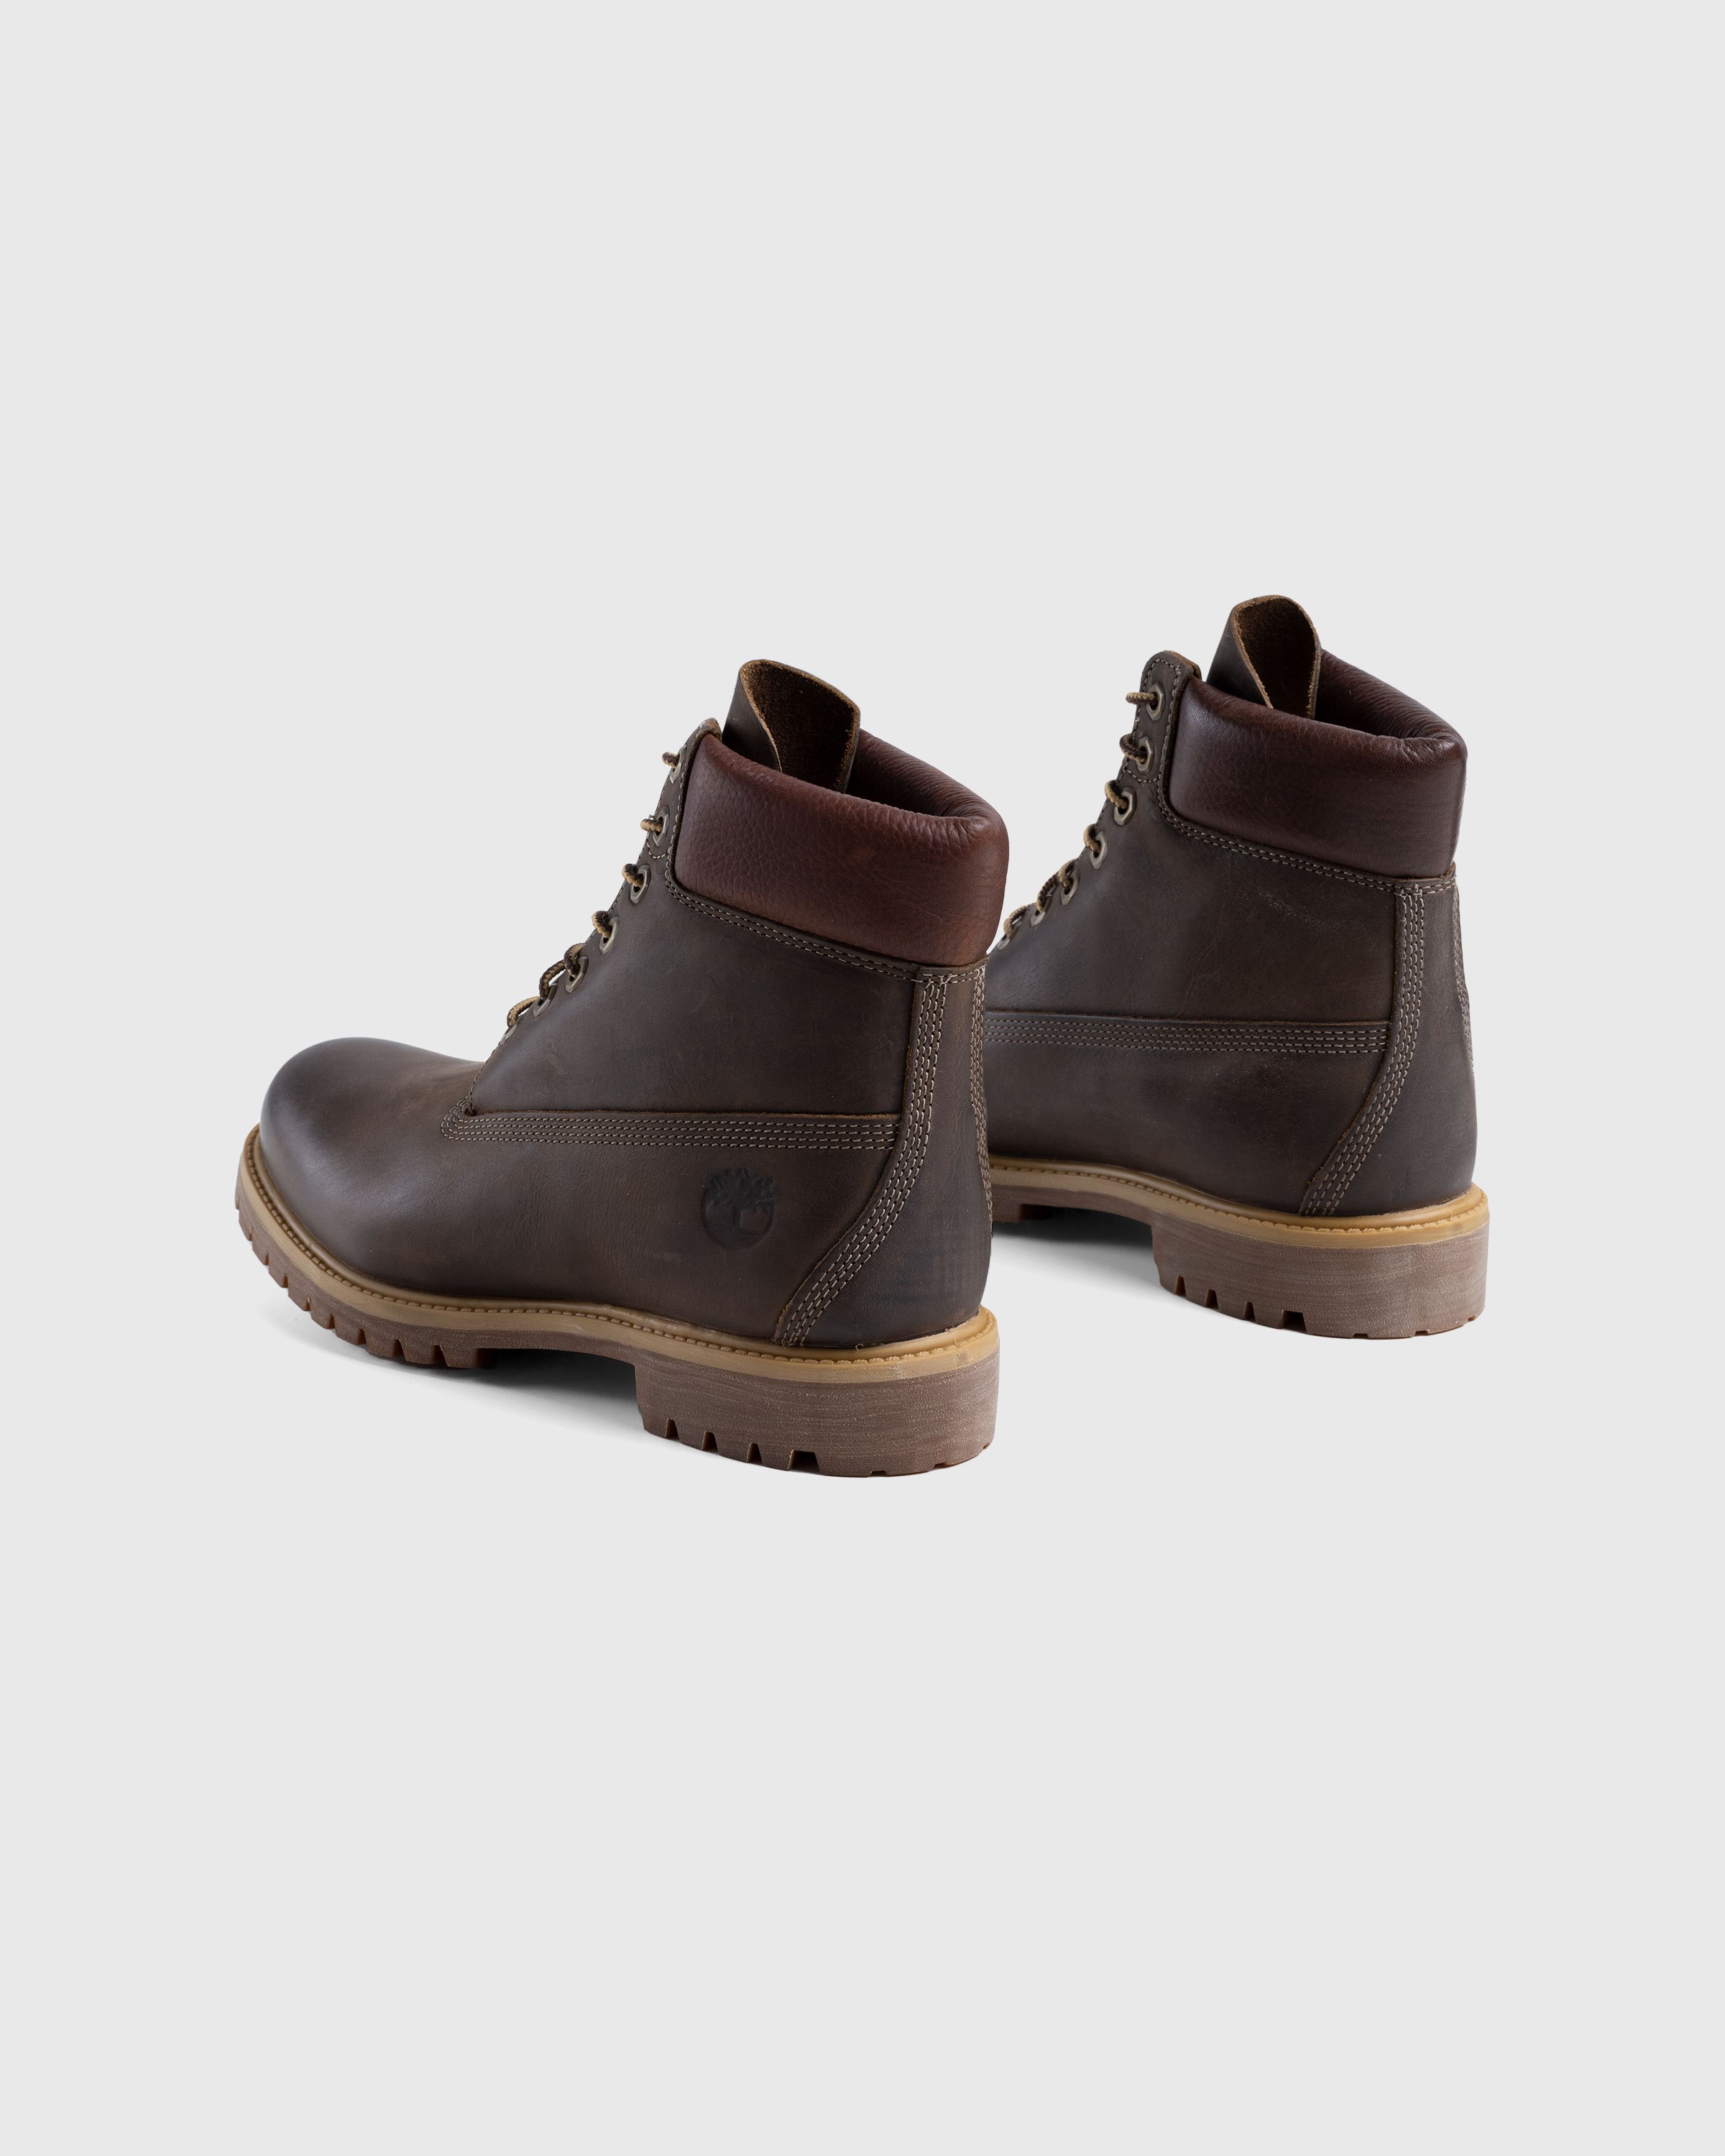 Timberland - Heritage 6 in Premium Brown - Footwear - Brown - Image 2